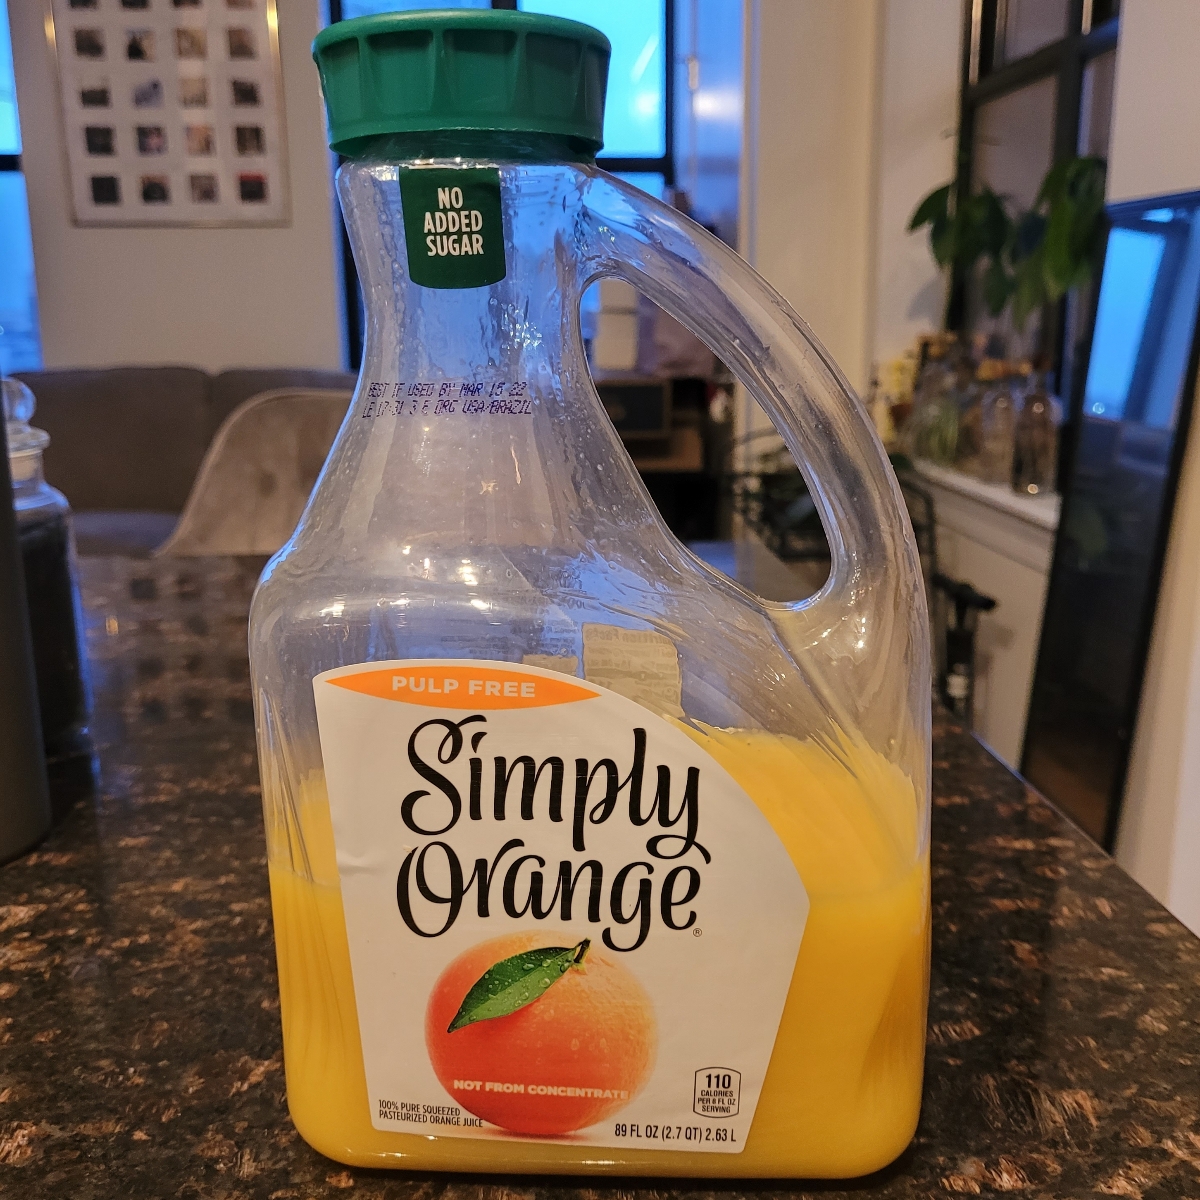 Simply Orange Juice Pulp Free - 89 oz jug